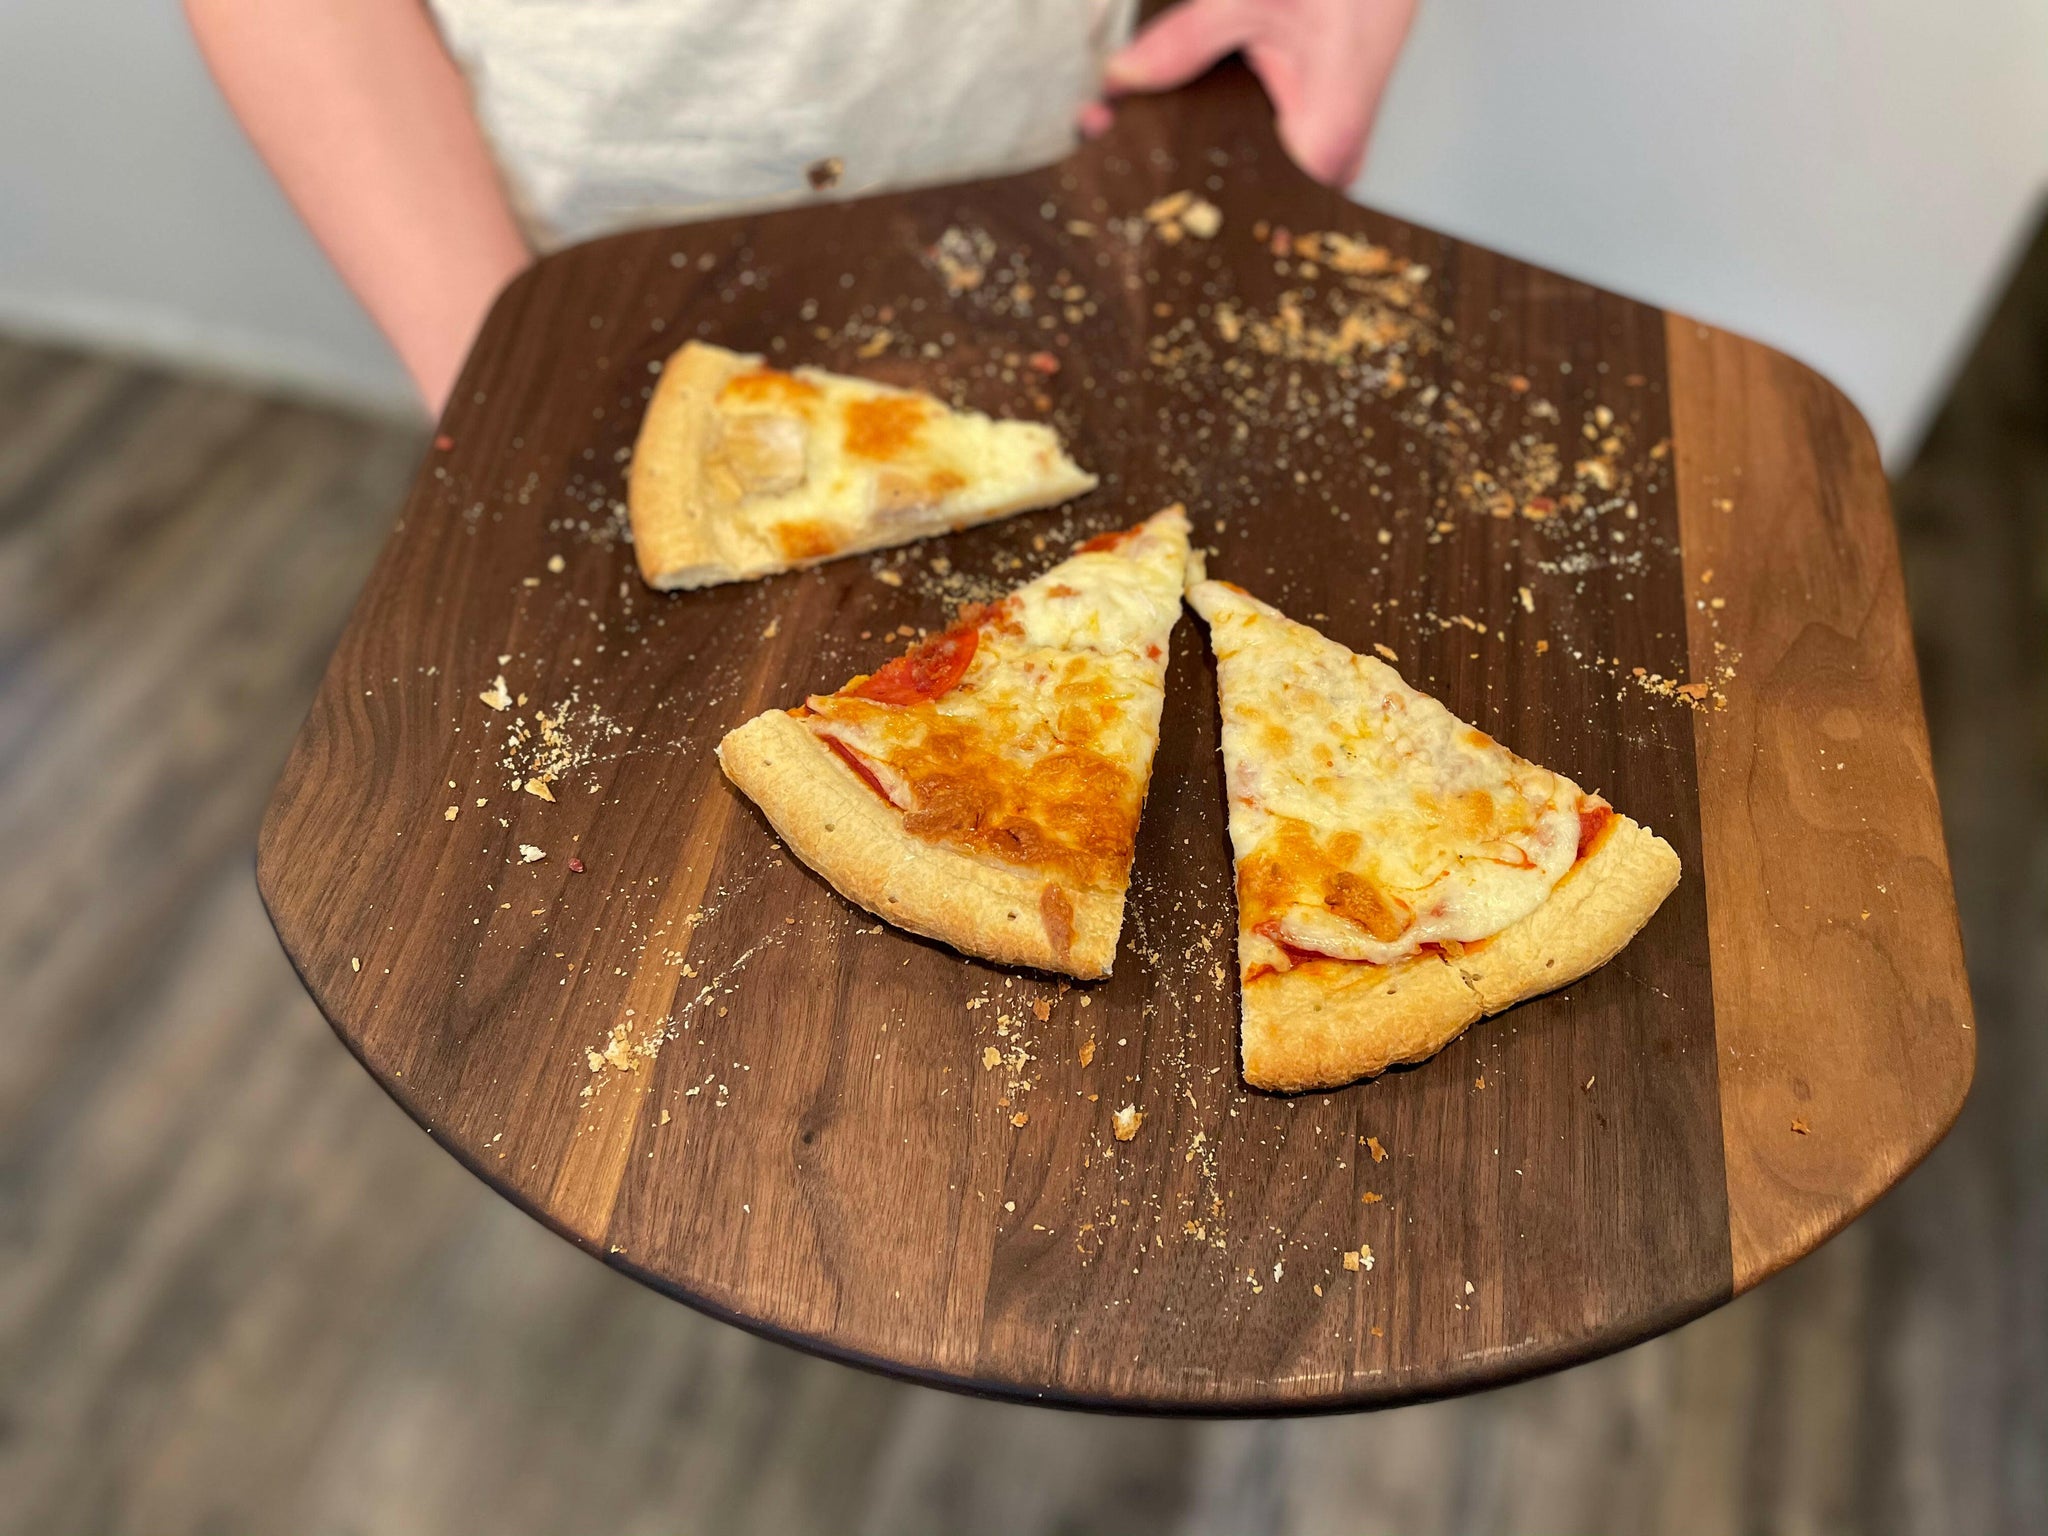 Pizza Cutting Board